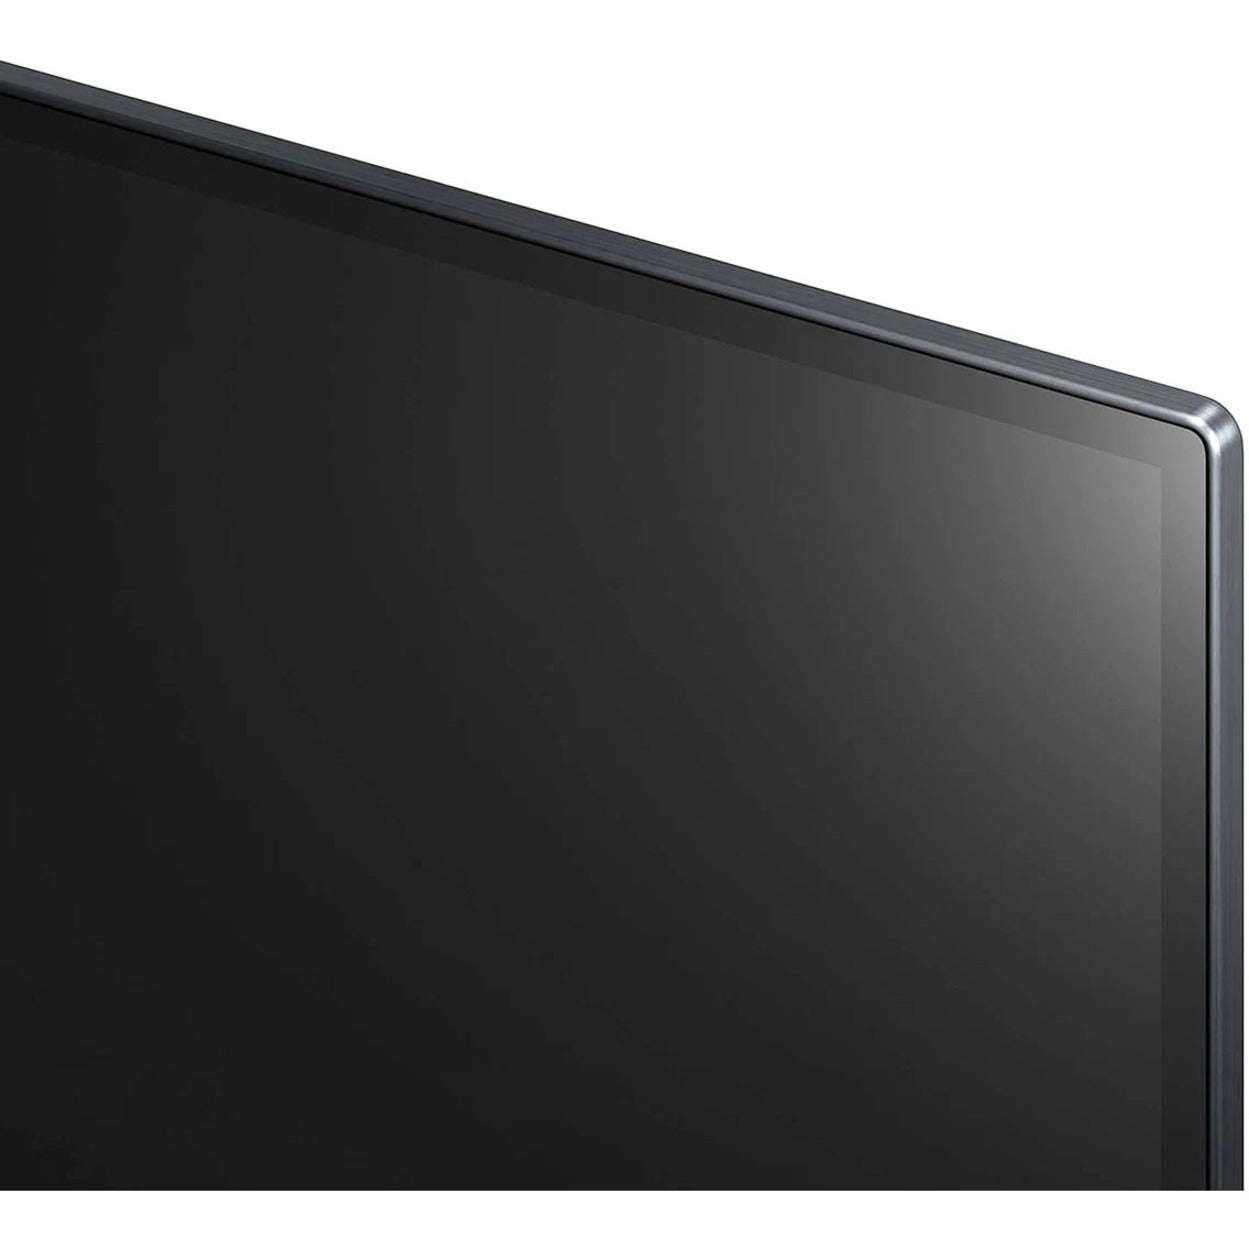 LG OLED77G1PUA G1 Smart OLED TV - 4K UHDTV, 76.7" Screen, Dolby Atmos, 120Hz Refresh Rate